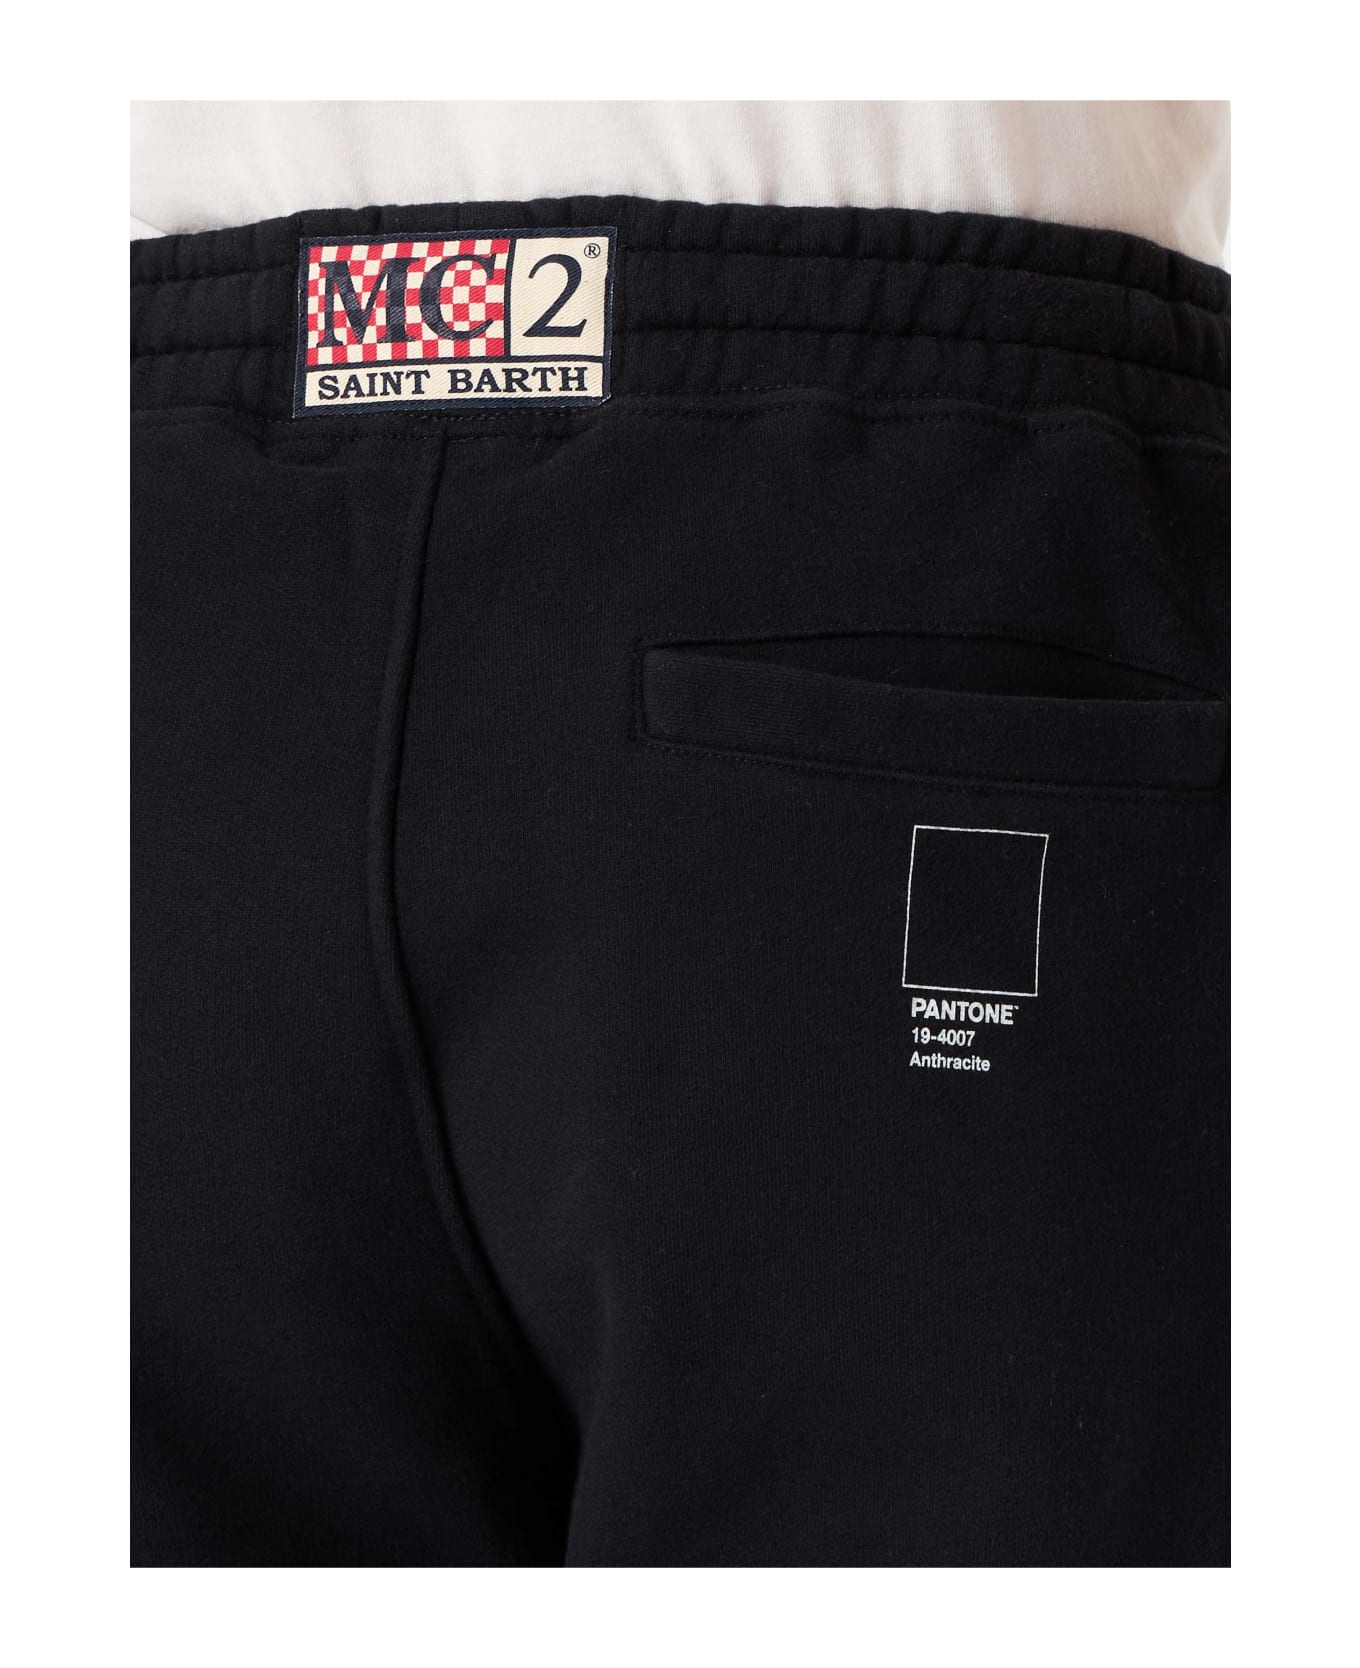 MC2 Saint Barth Black Track Pants | Pantone Special Edition - BLACK